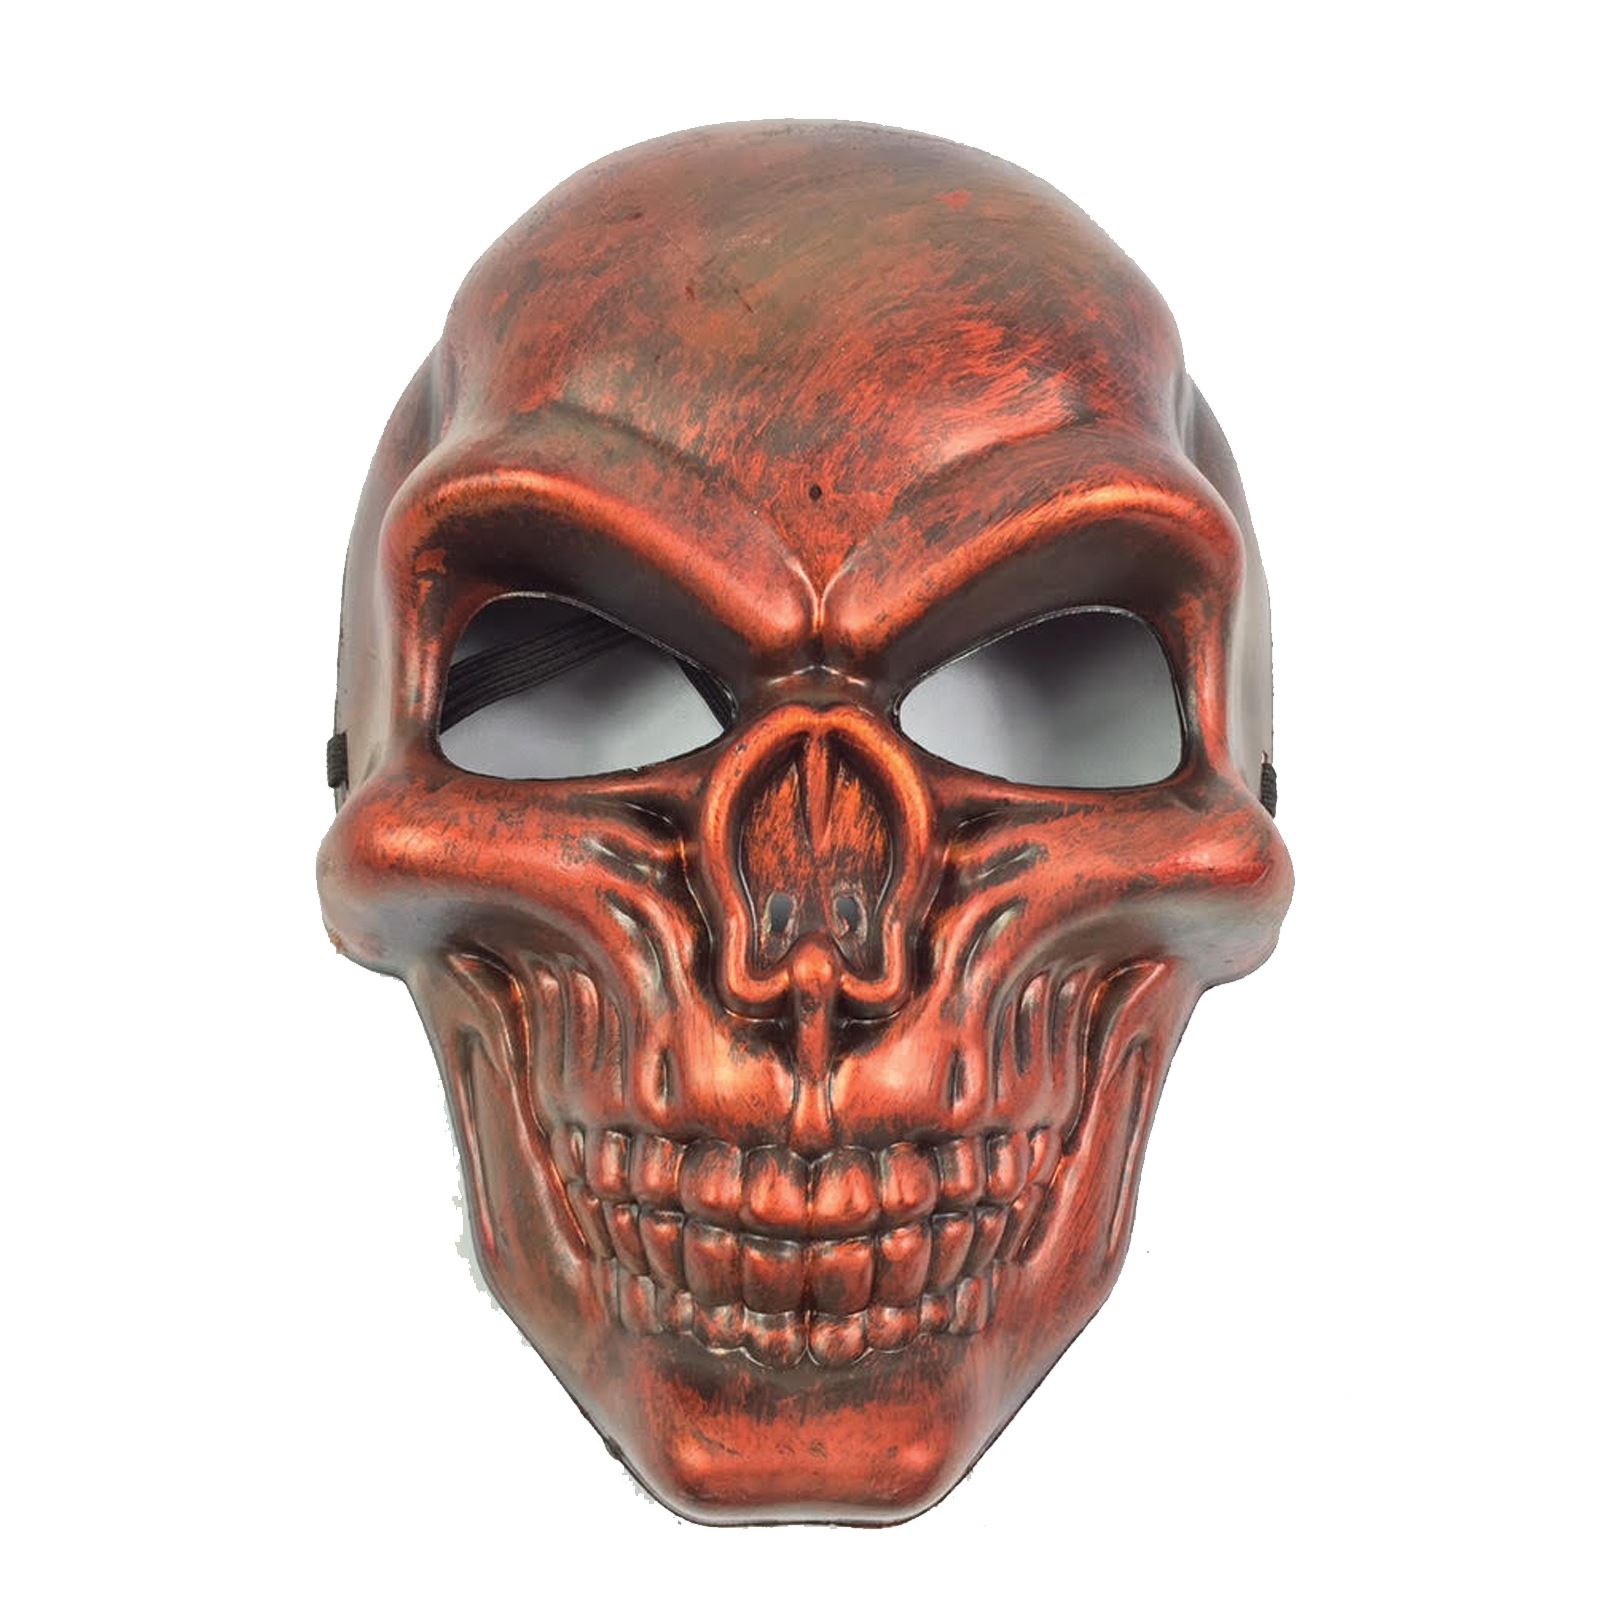 Kids Plastic Skull Mask Halloween Scary Fancy Dress Mask | eBay